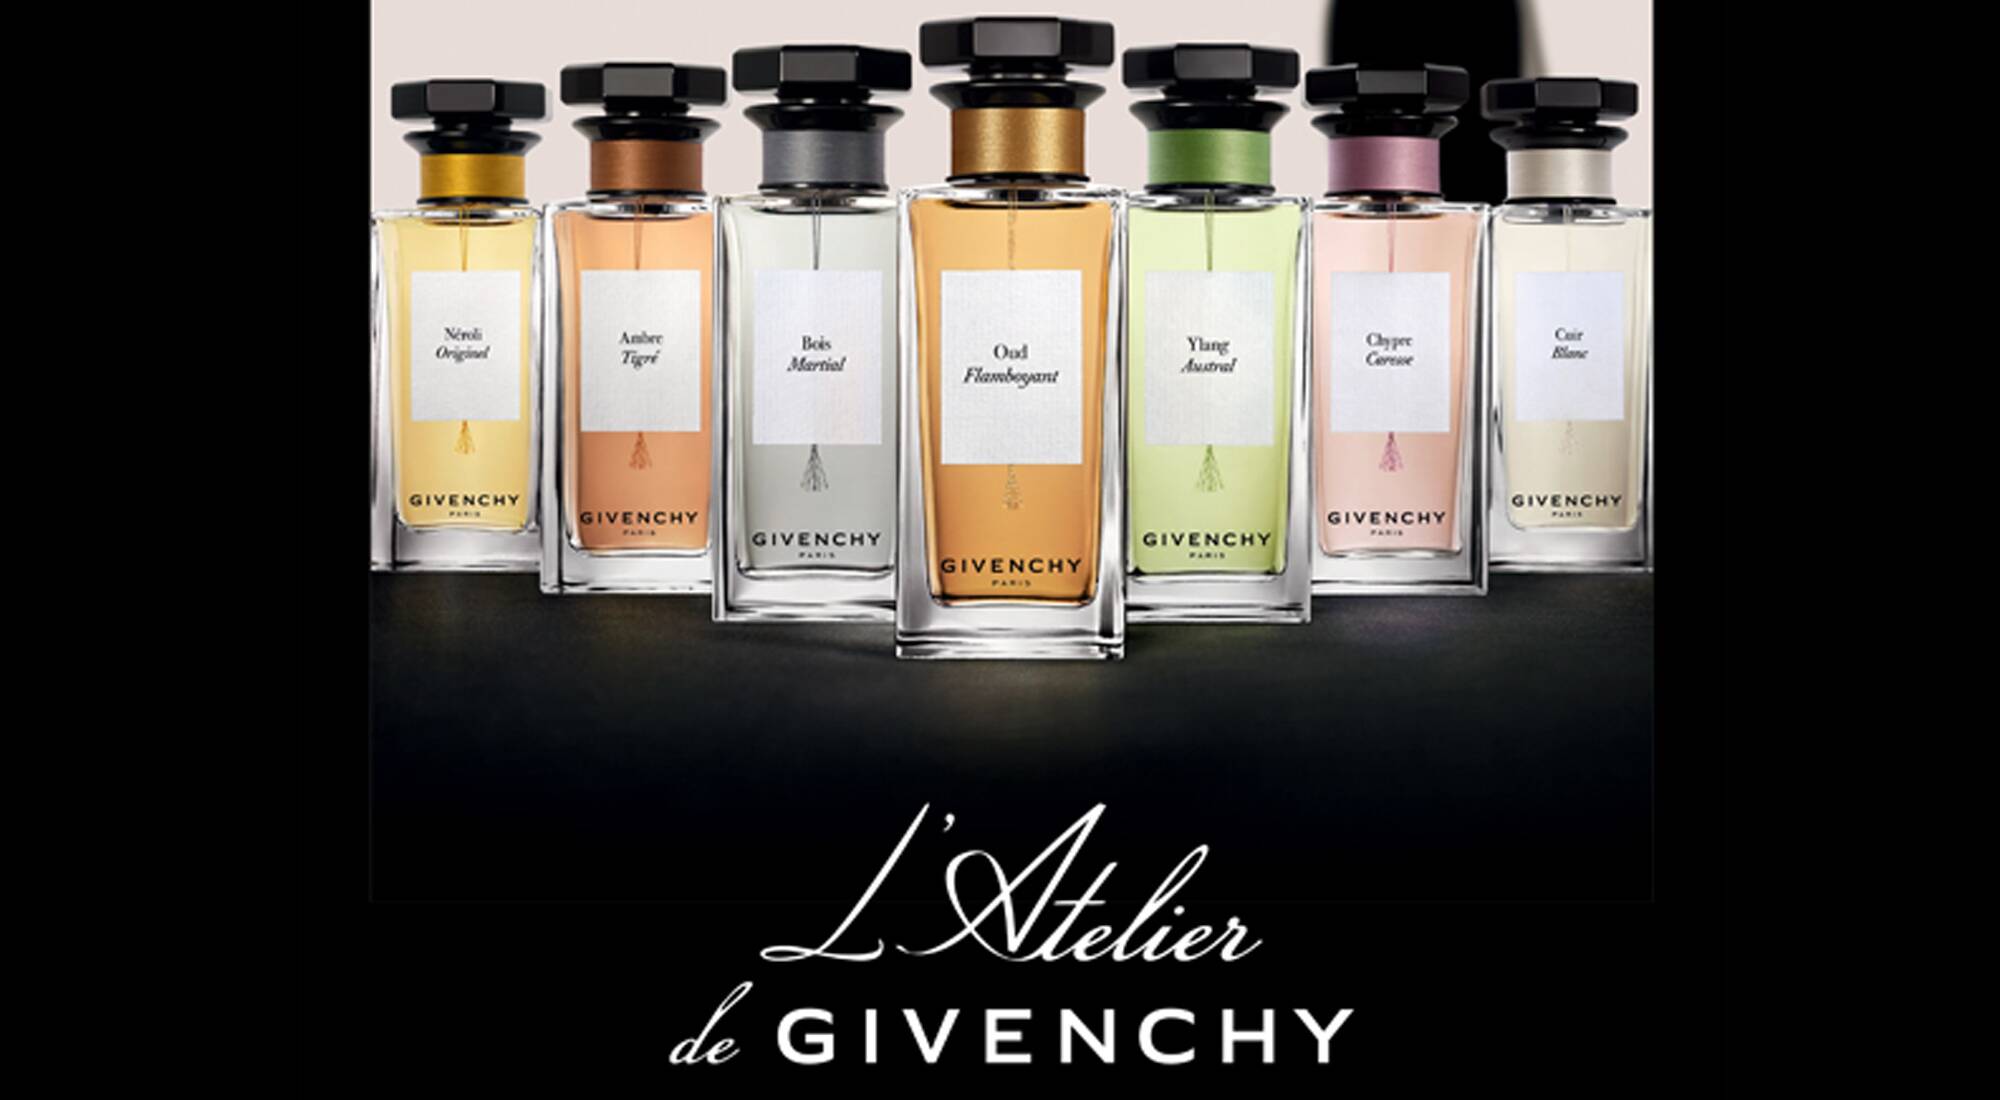 givenchy iconic perfume